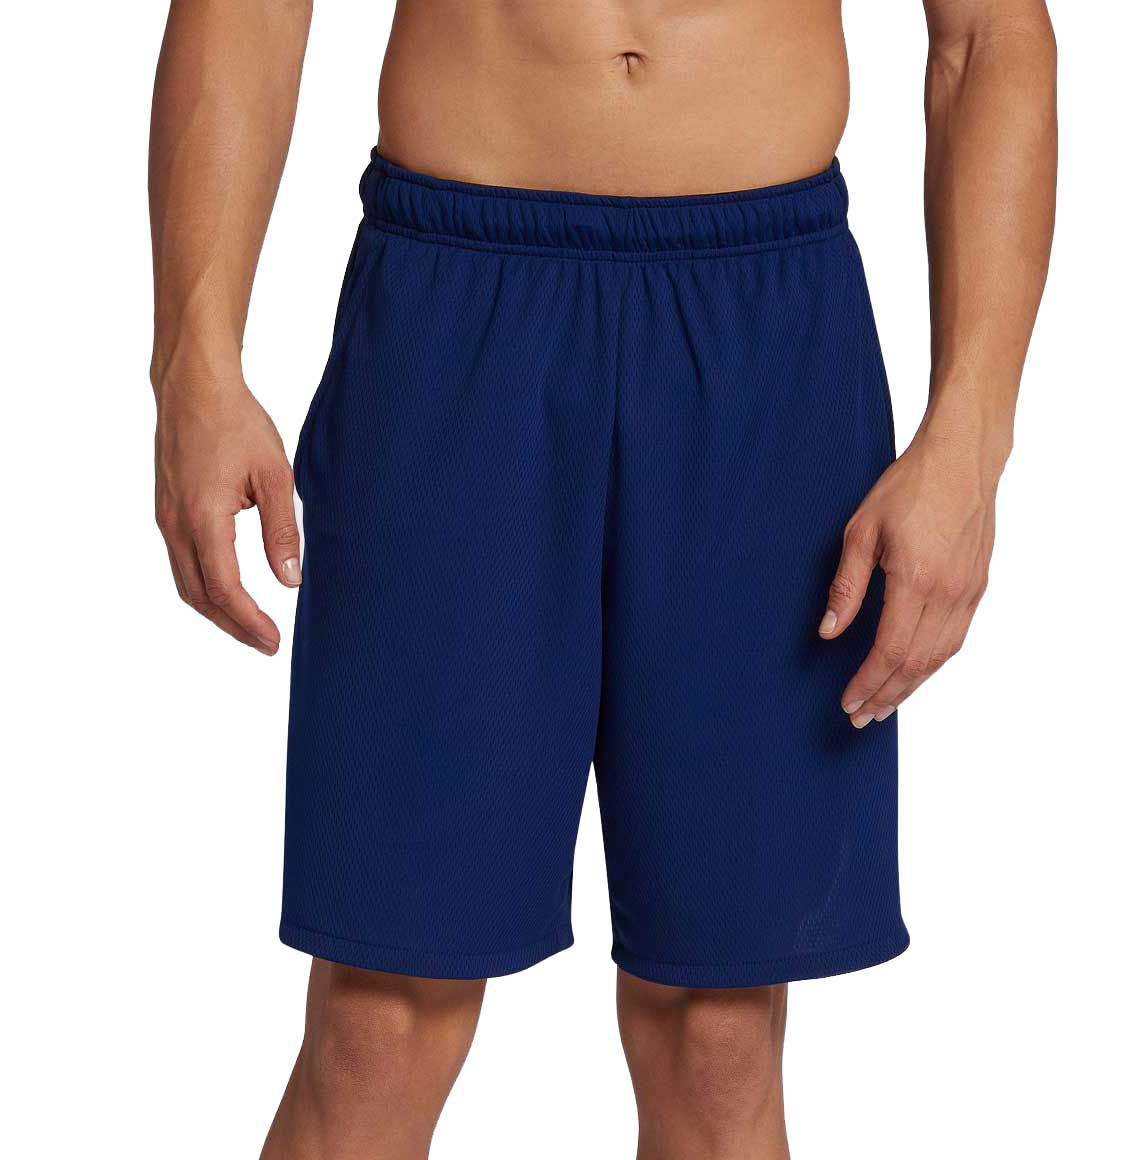 Nike Men's Dry 4.0 Training Shorts (Regular and Big & Tall) - .97 - .97